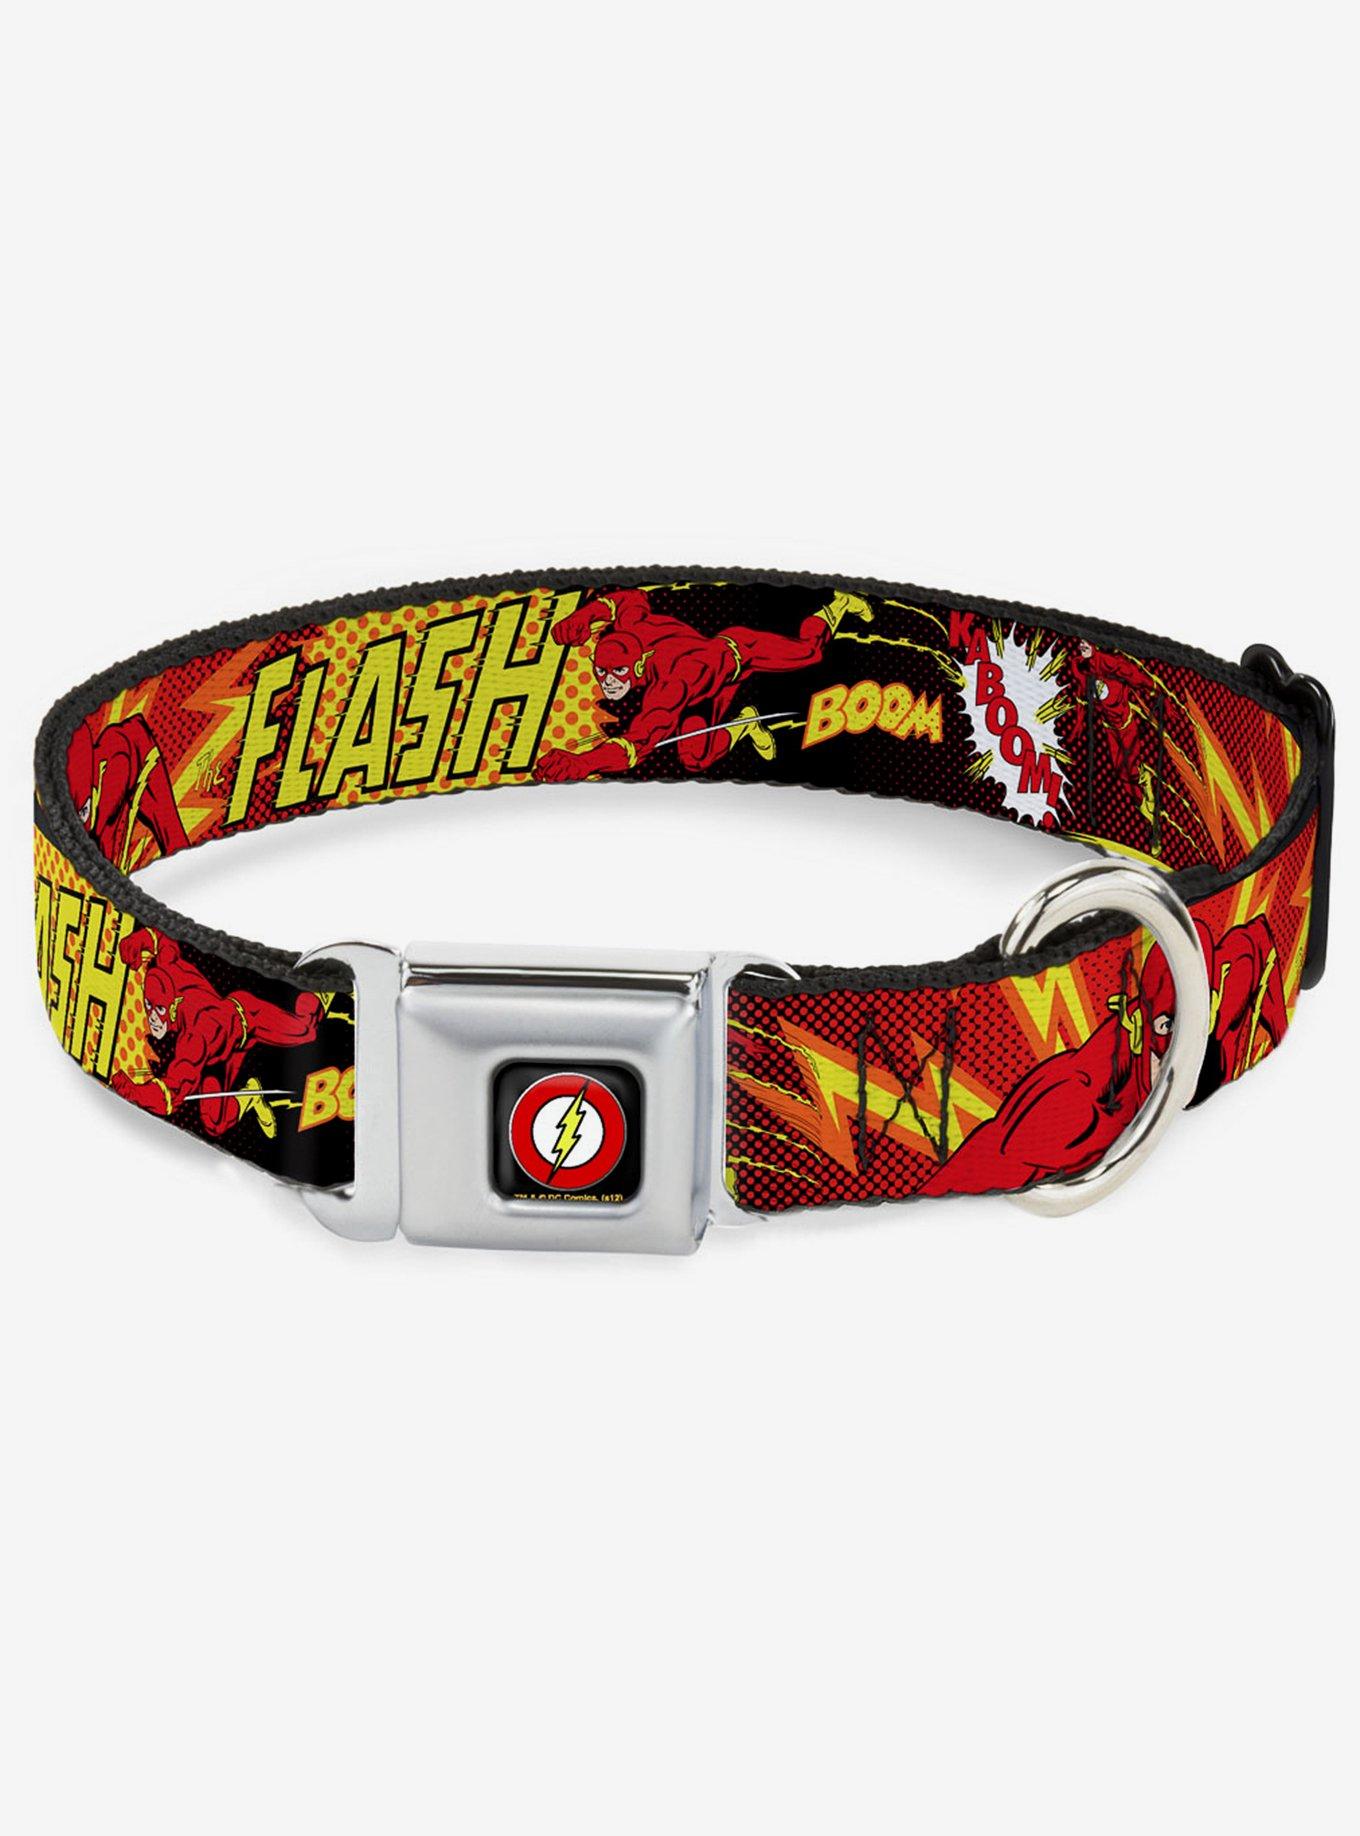 DC Comics Justice League The Flash Boom Kaboom Seatbelt Buckle Dog Collar, MULTICOLOR, hi-res